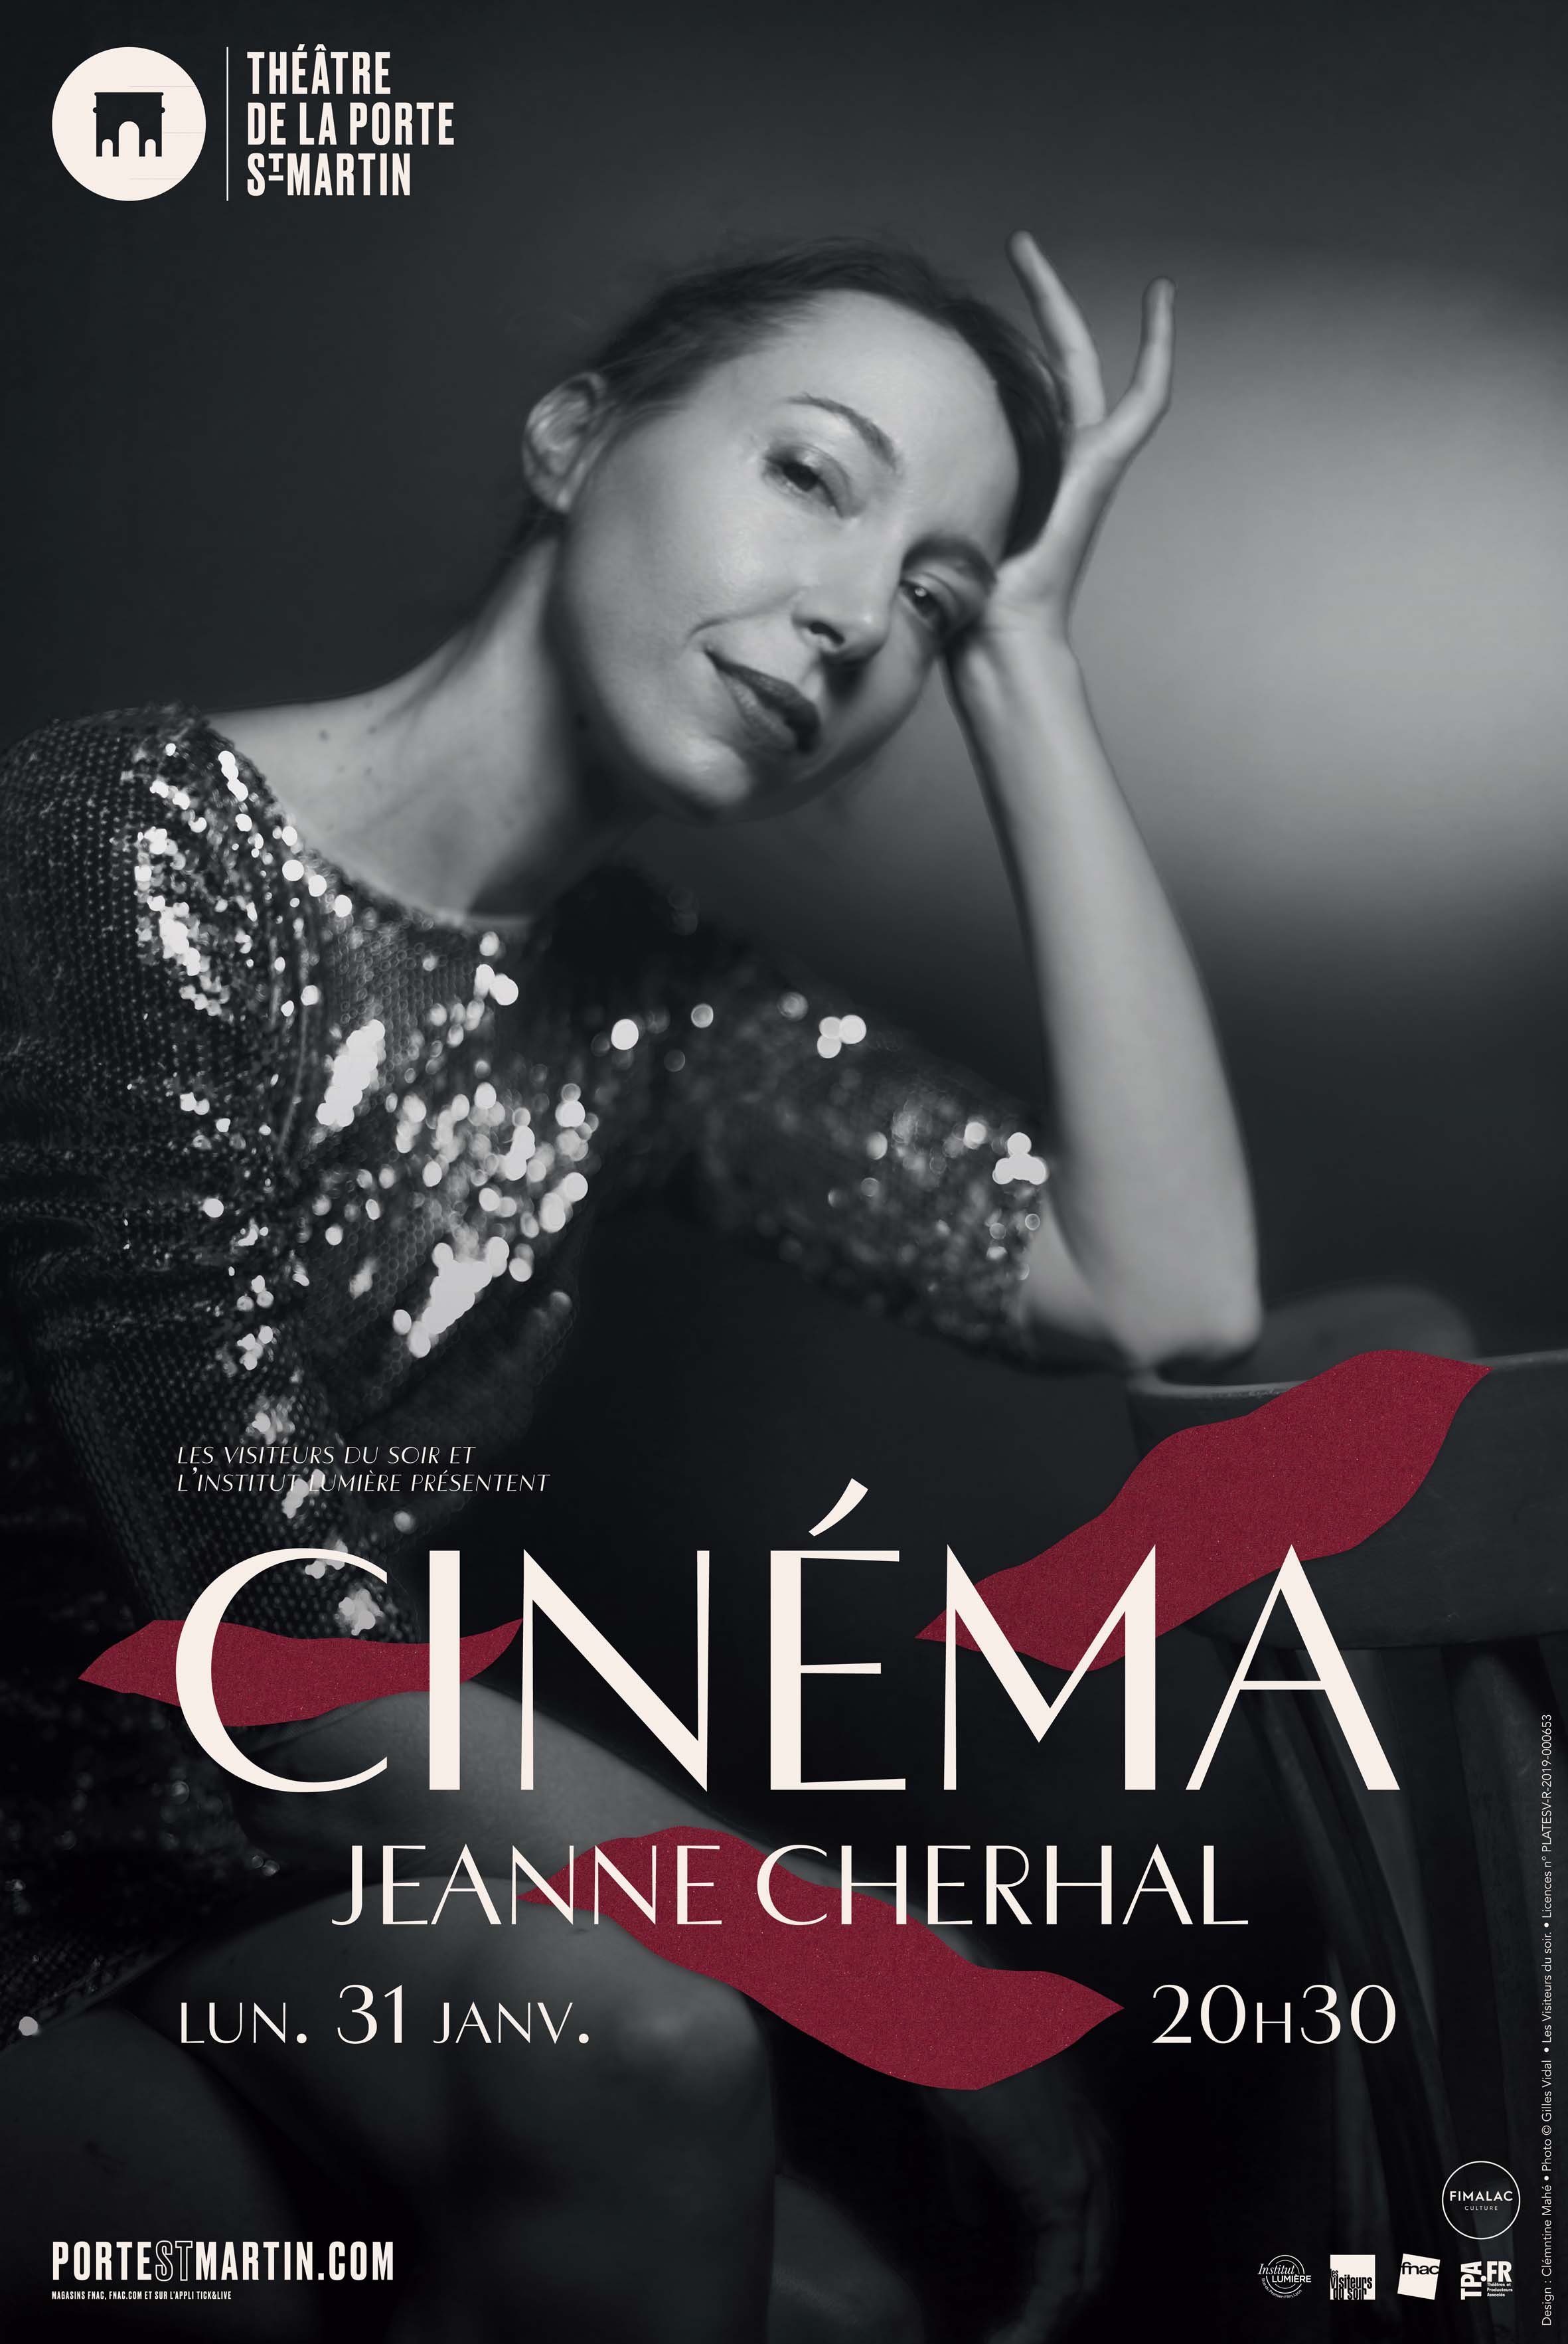 Jeanne Cherhal